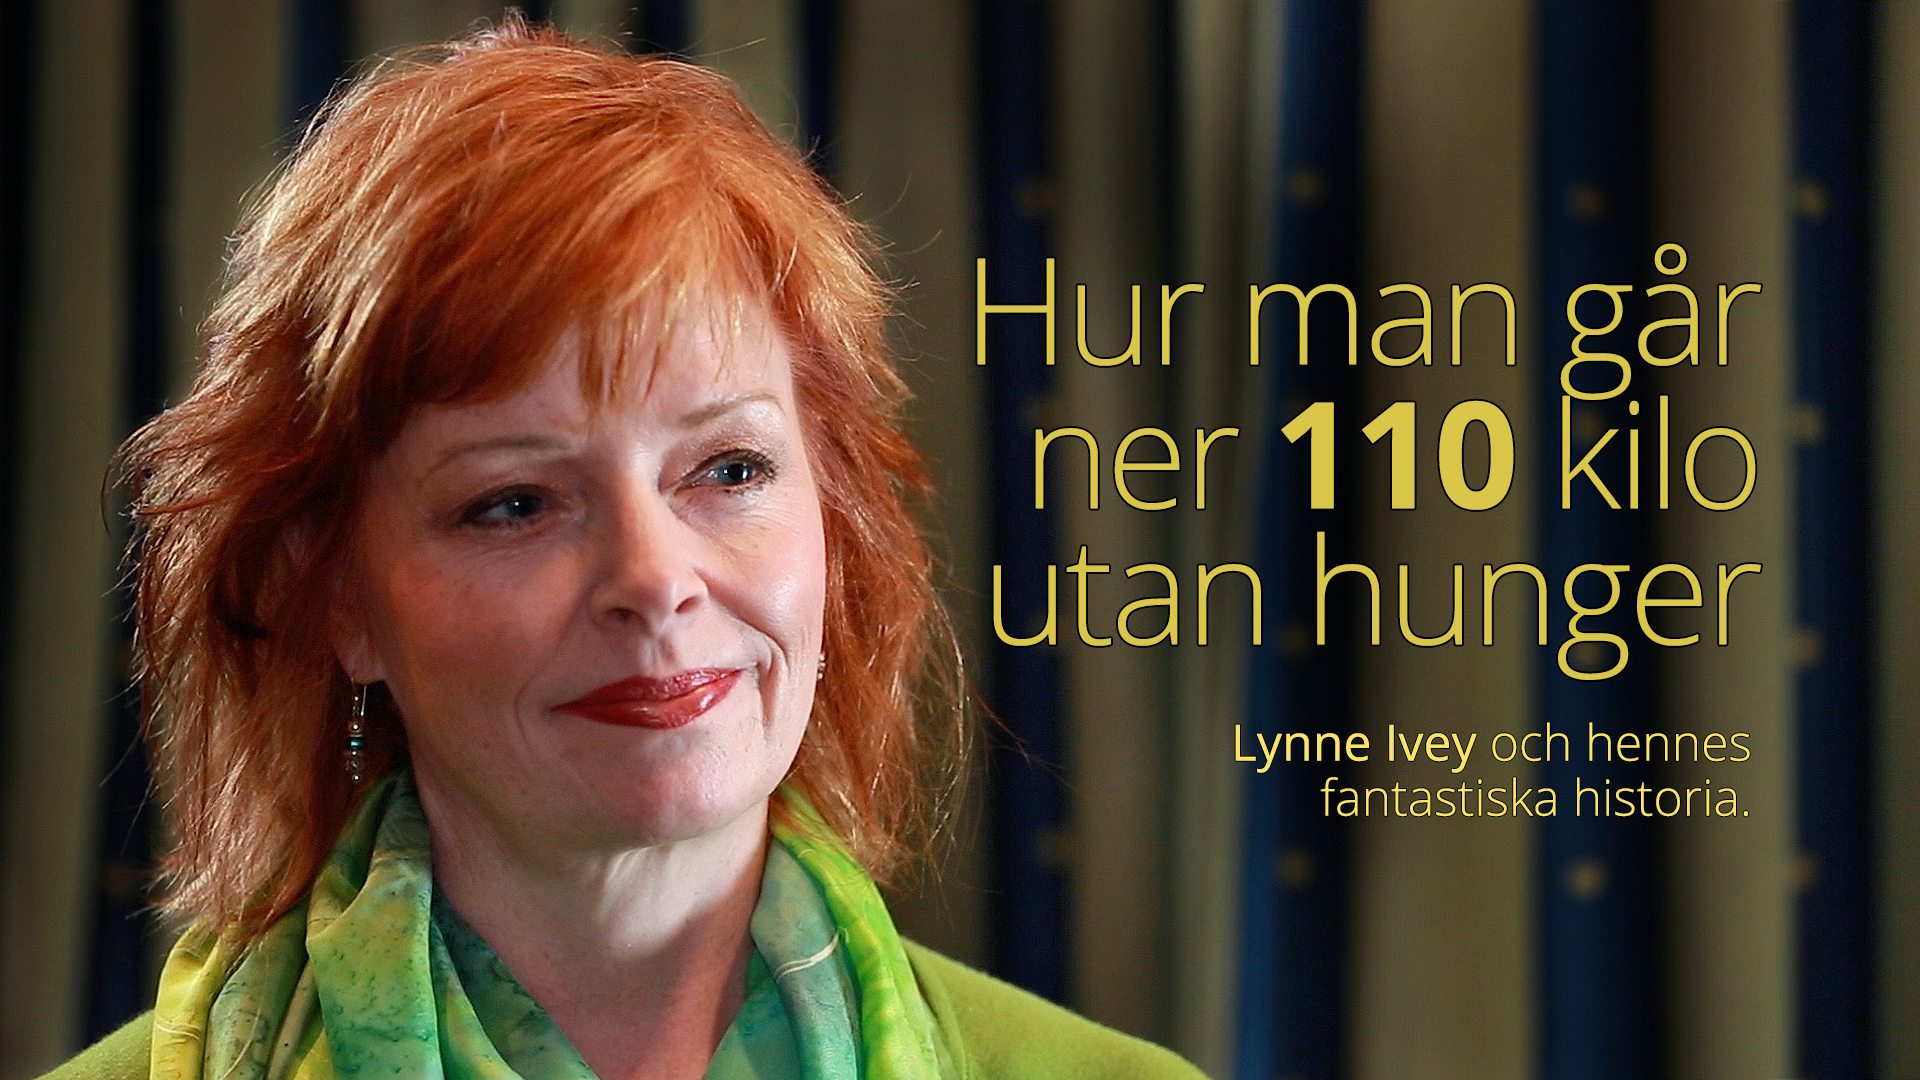 Lynne Daniel Ivey - Success story (1080p)